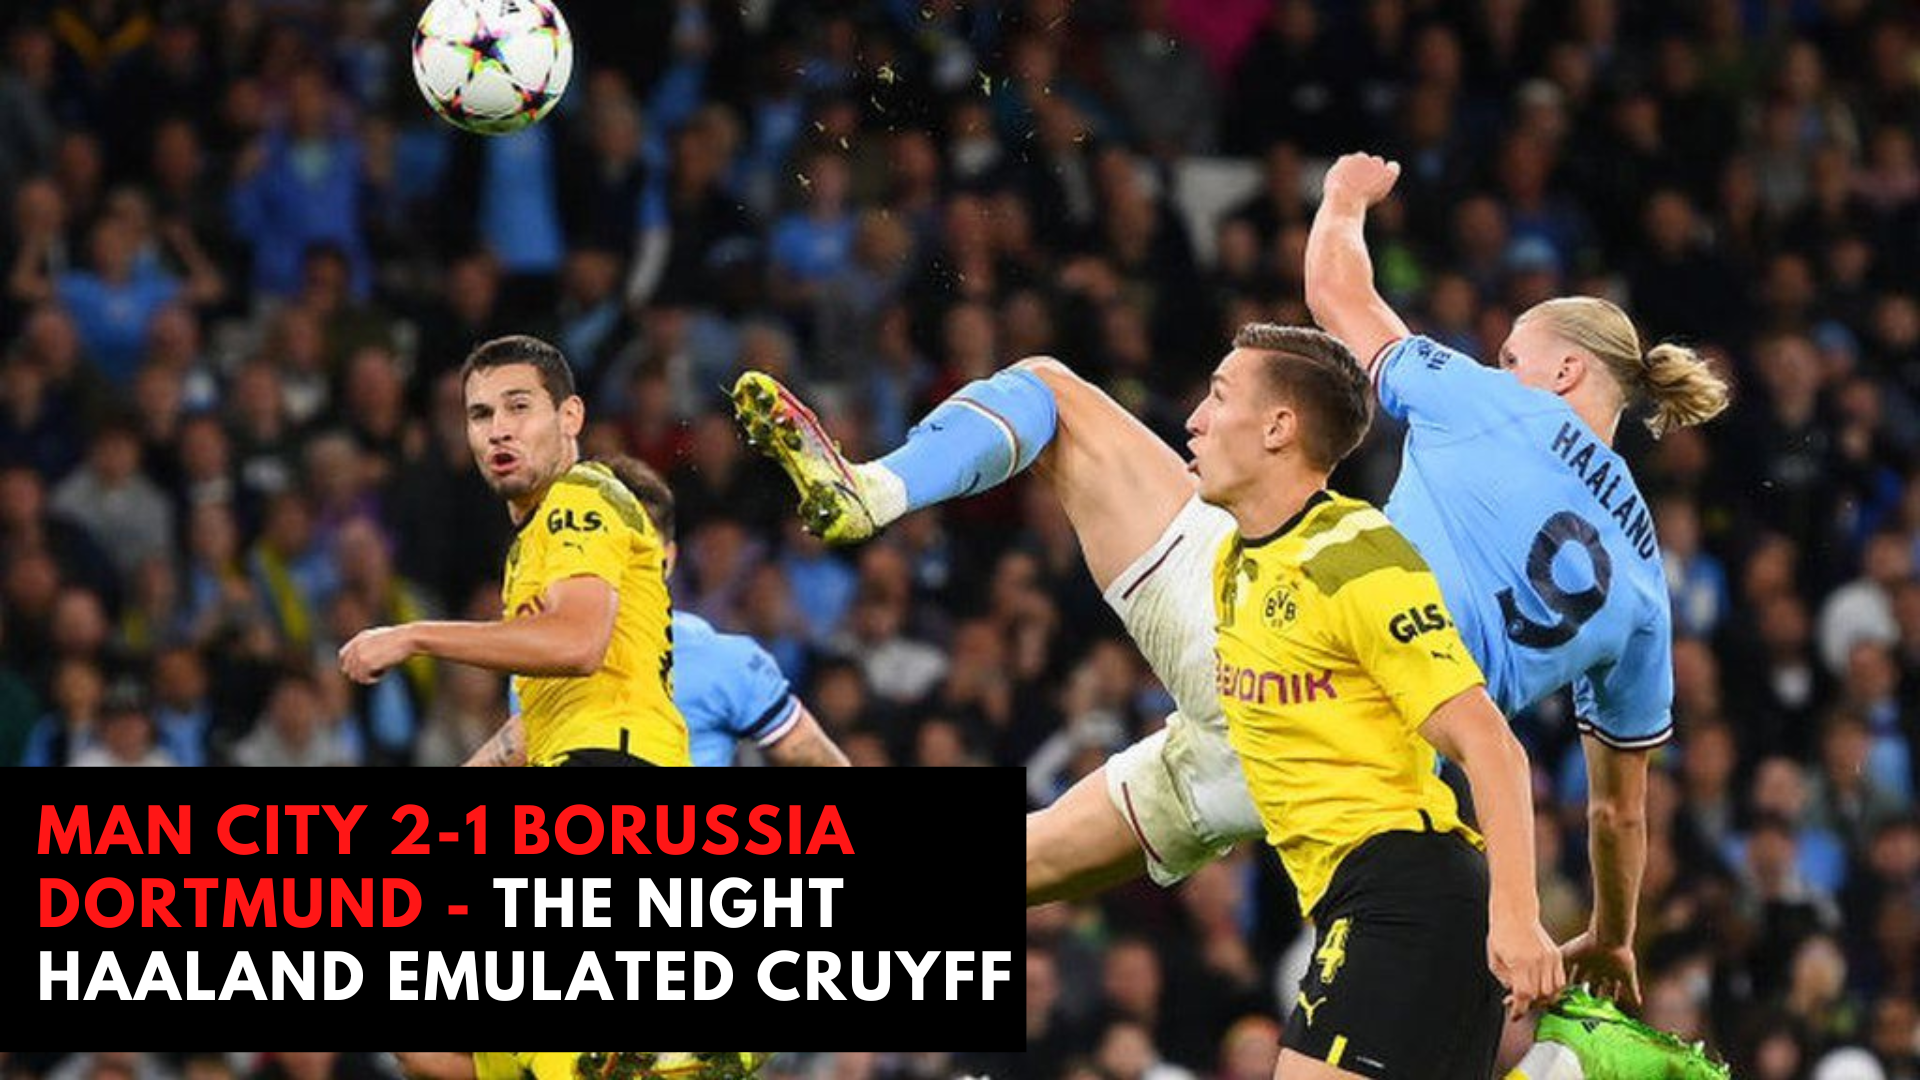 Man City 2-1 Borussia Dortmund - The Night Haaland Emulated Cruyff